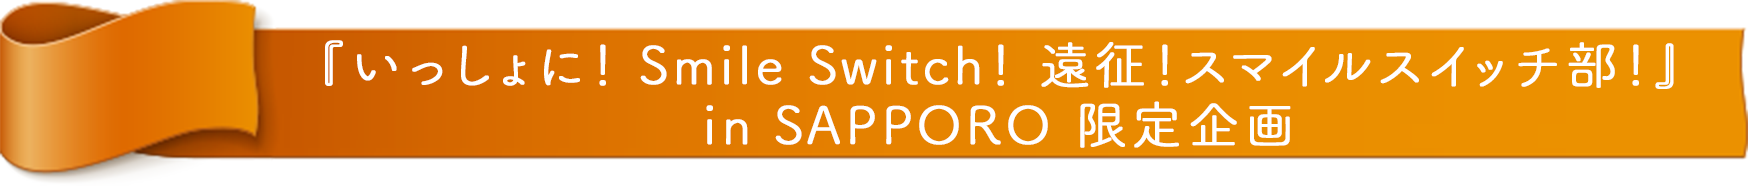 『FUJIYA いっしょに！ Smile Switch！ 遠征！スマイルスイッチ部！ in SAPPORO』 限定企画